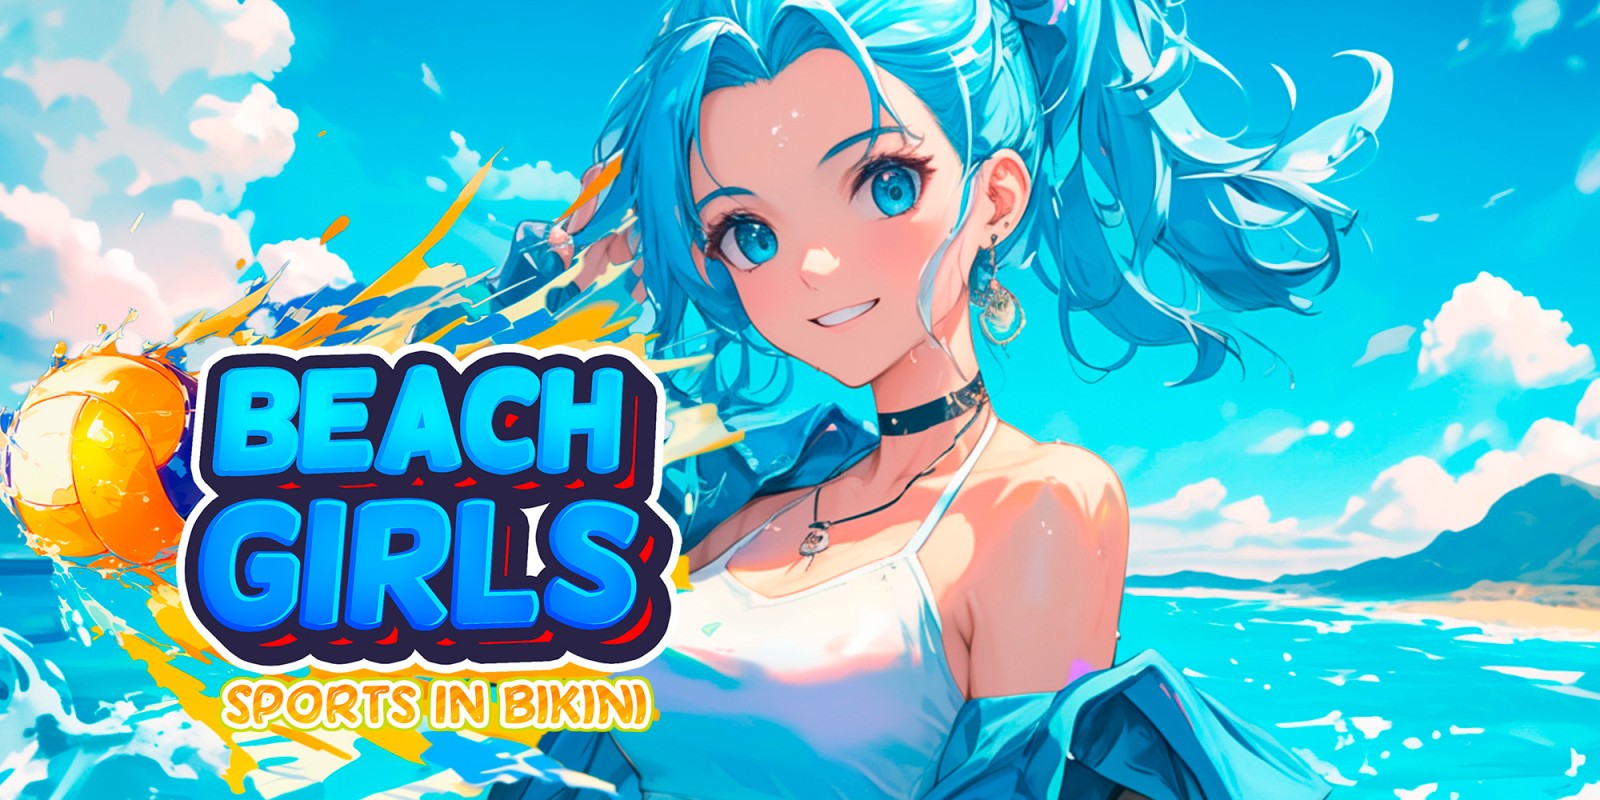 Beach Girls 2: Sports in Bikini